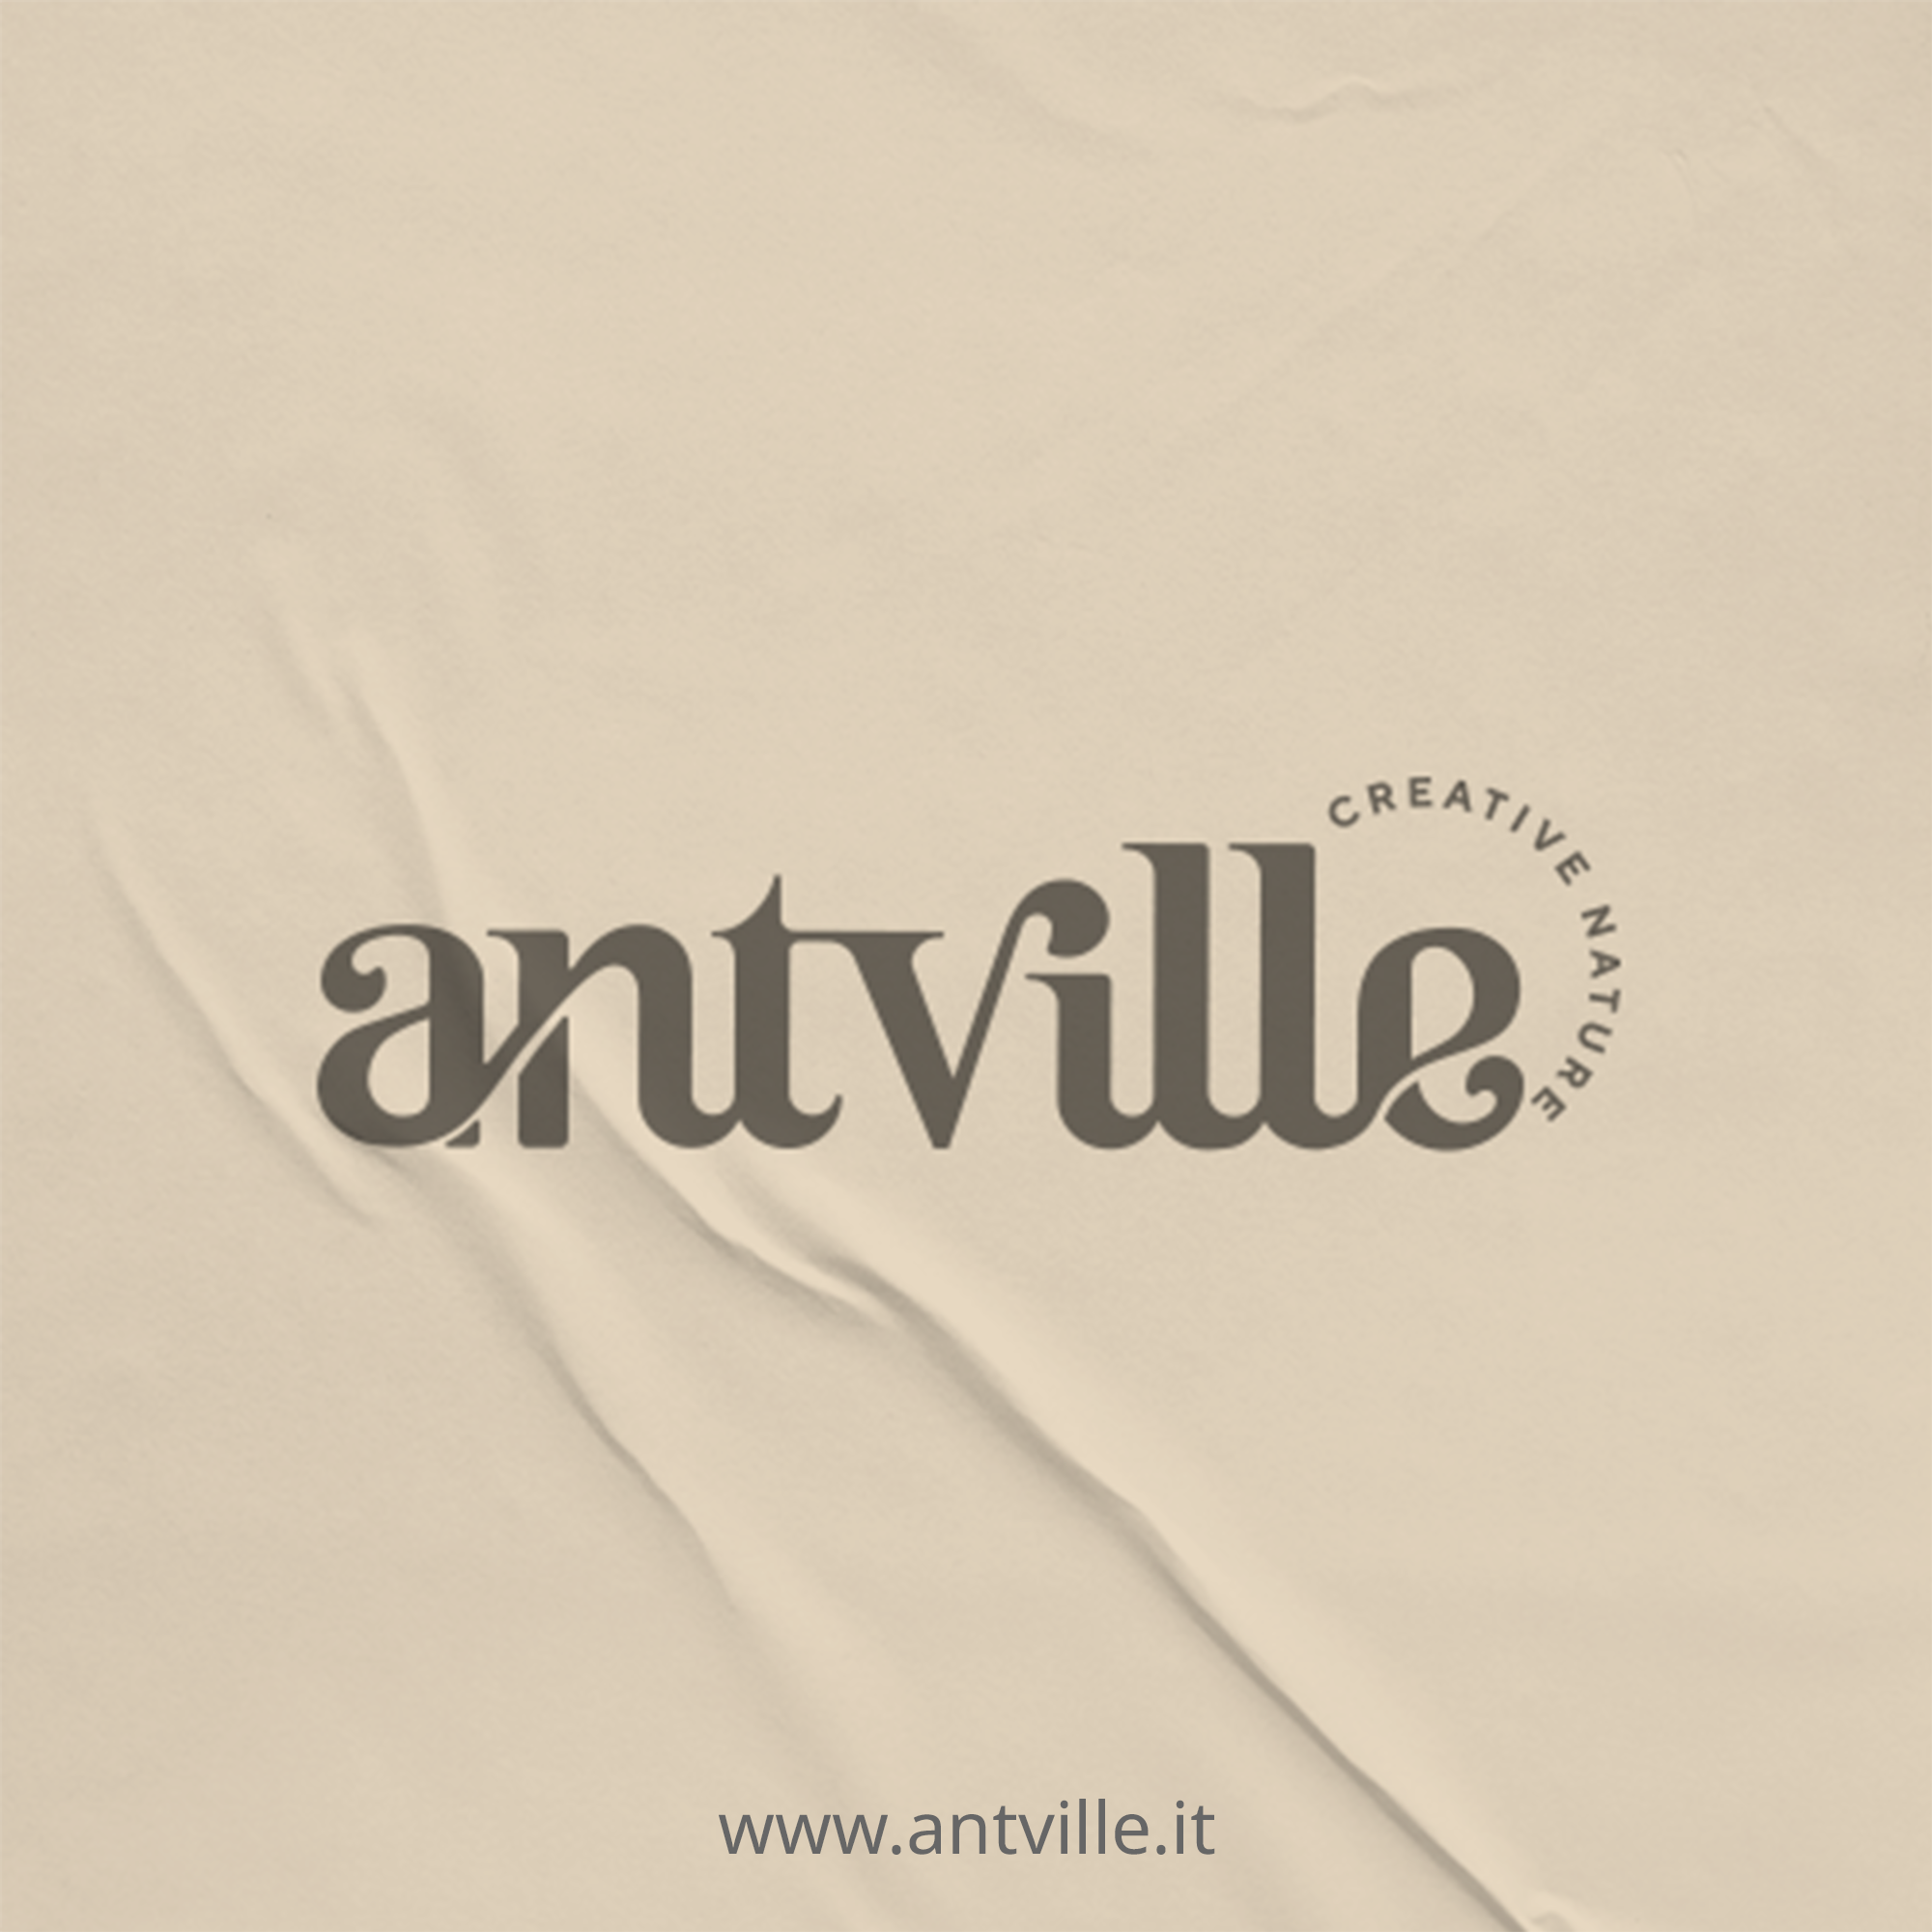 Antville